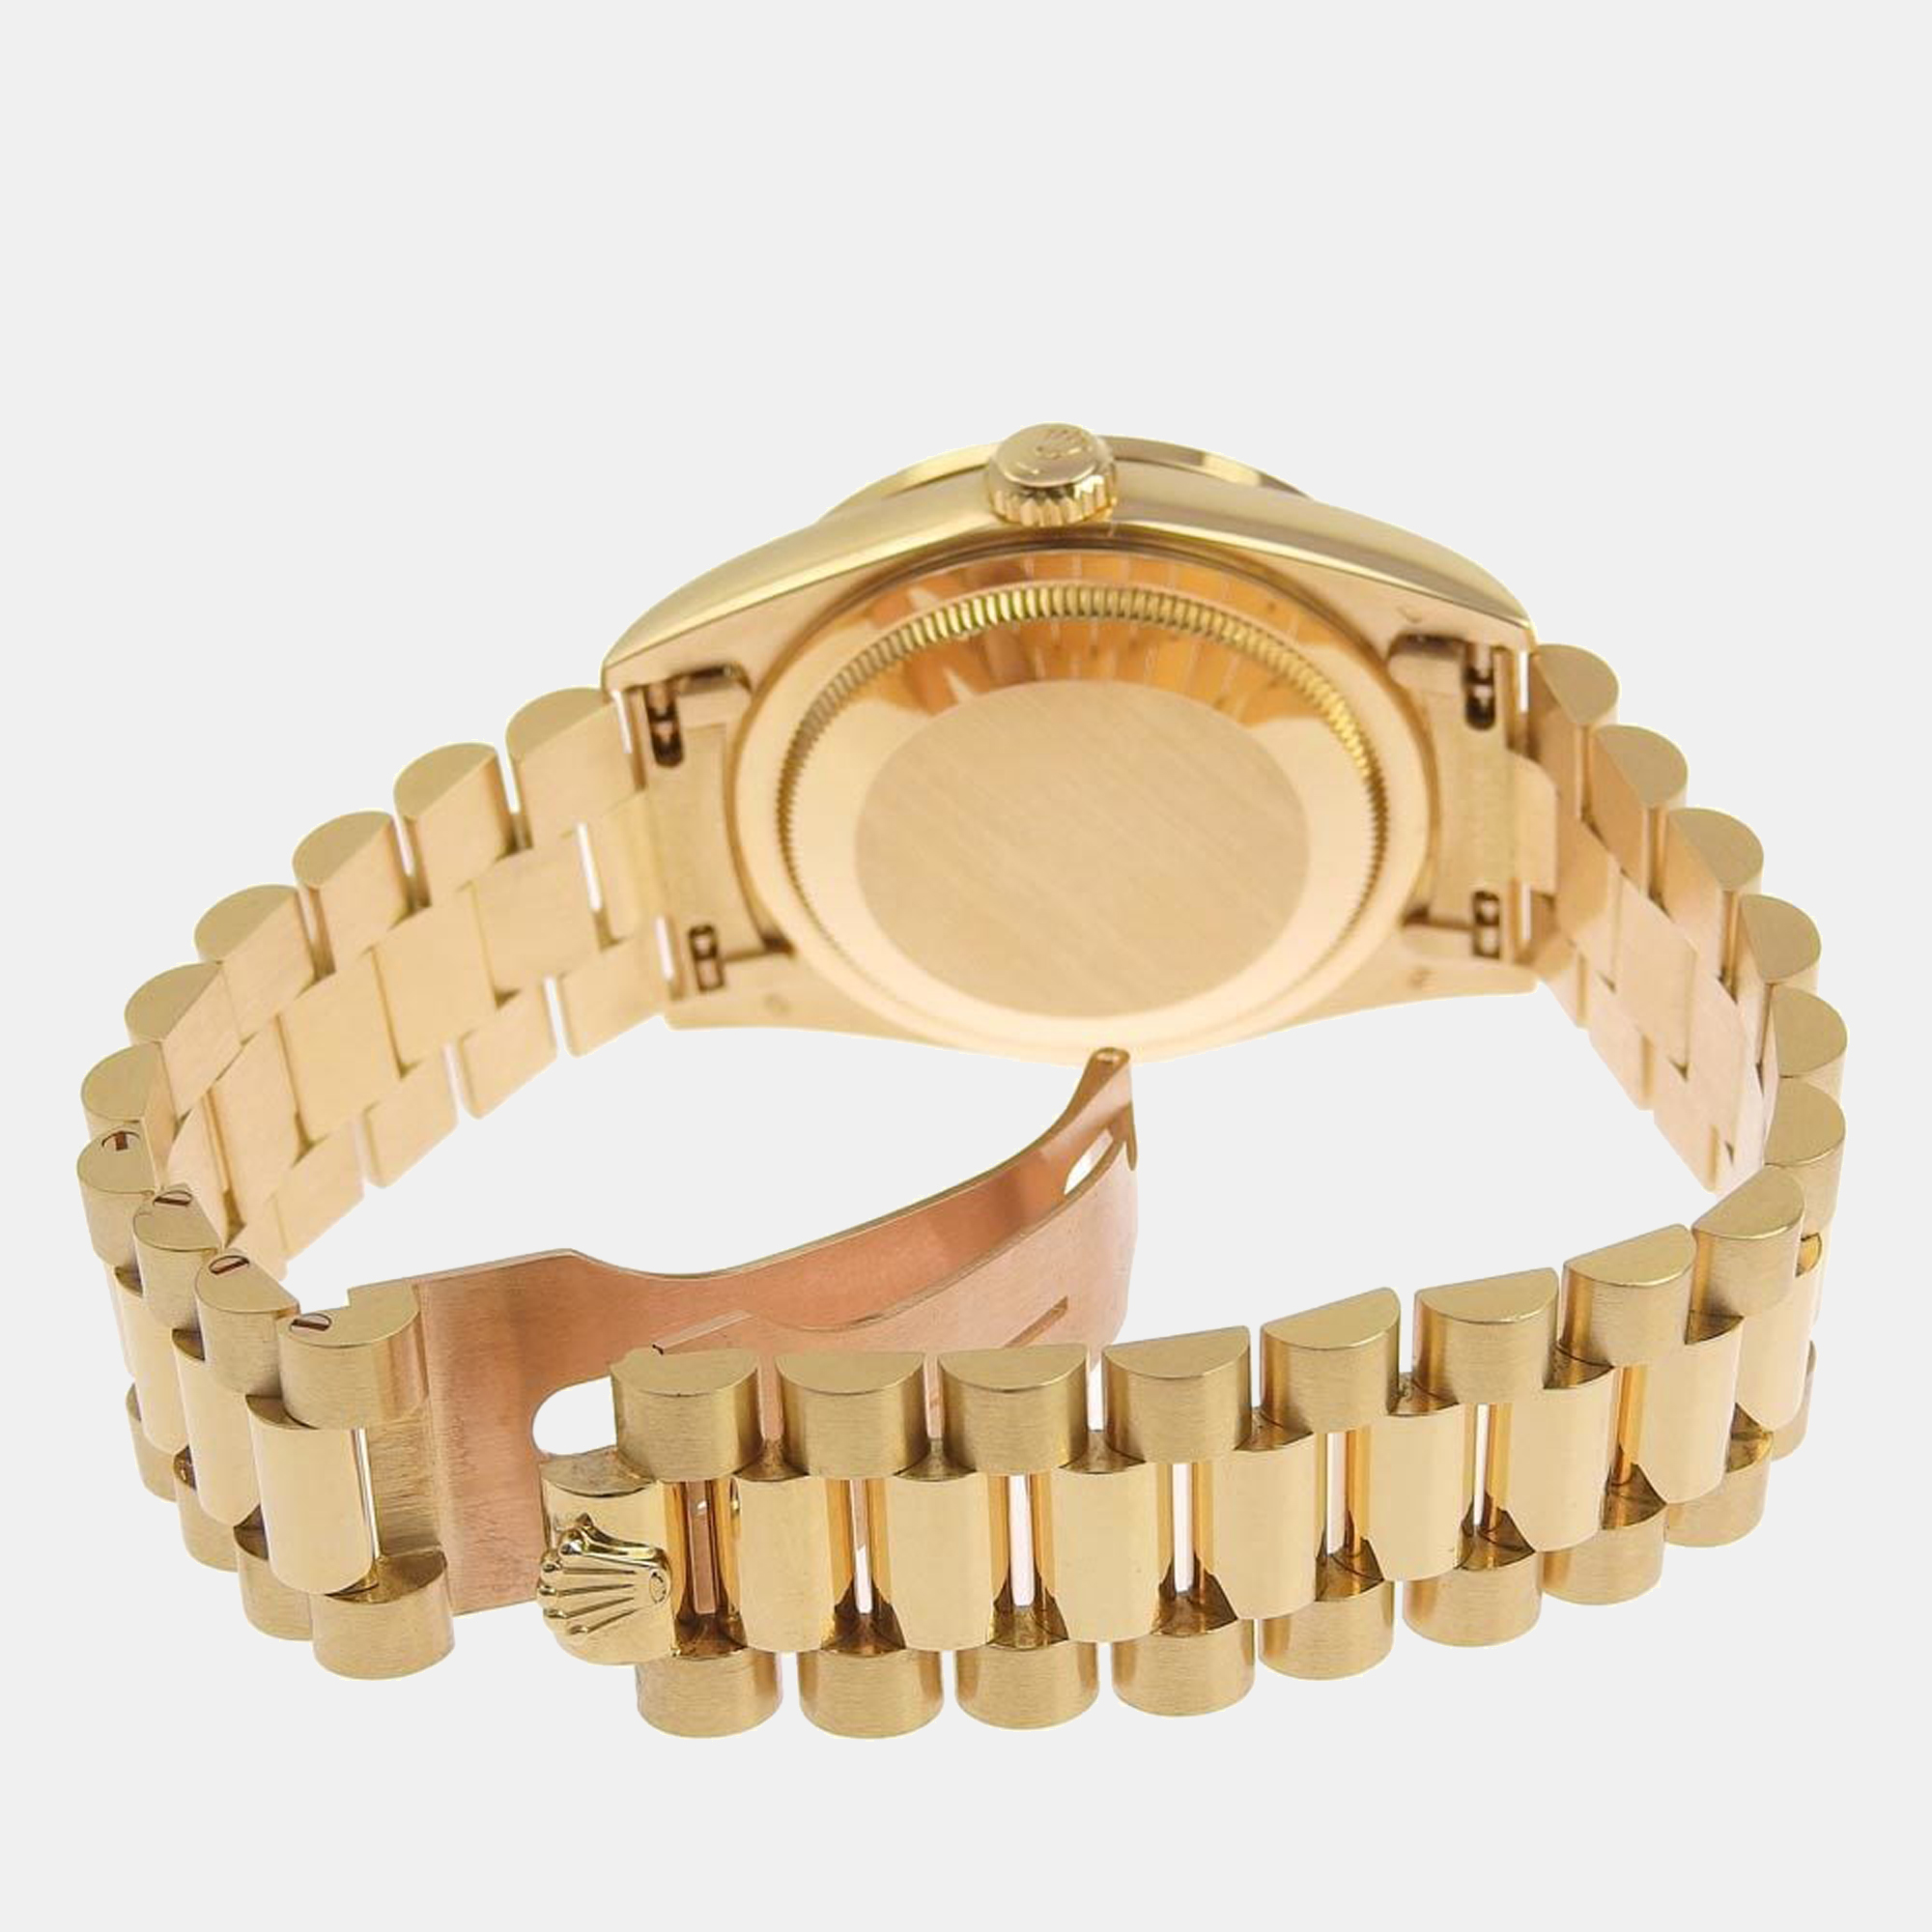 Rolex Champagne Diamonds 18k Yellow Gold Day - Date President 18388 Men's Wristwatch 36 Mm